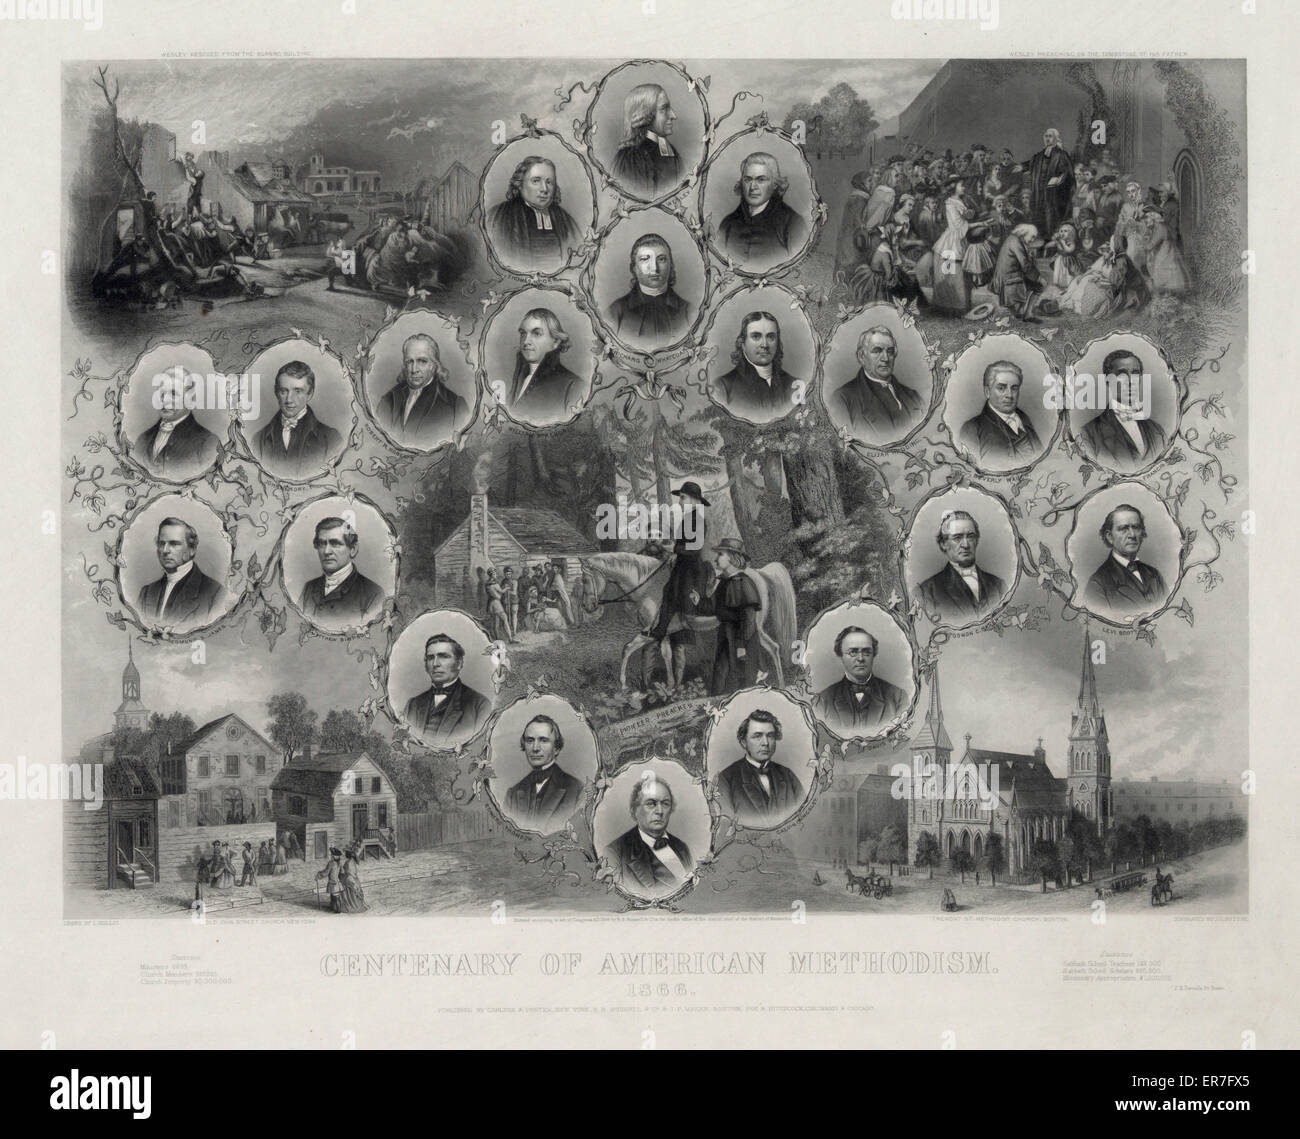 Centenary of American methodism. 1866. Stock Photo